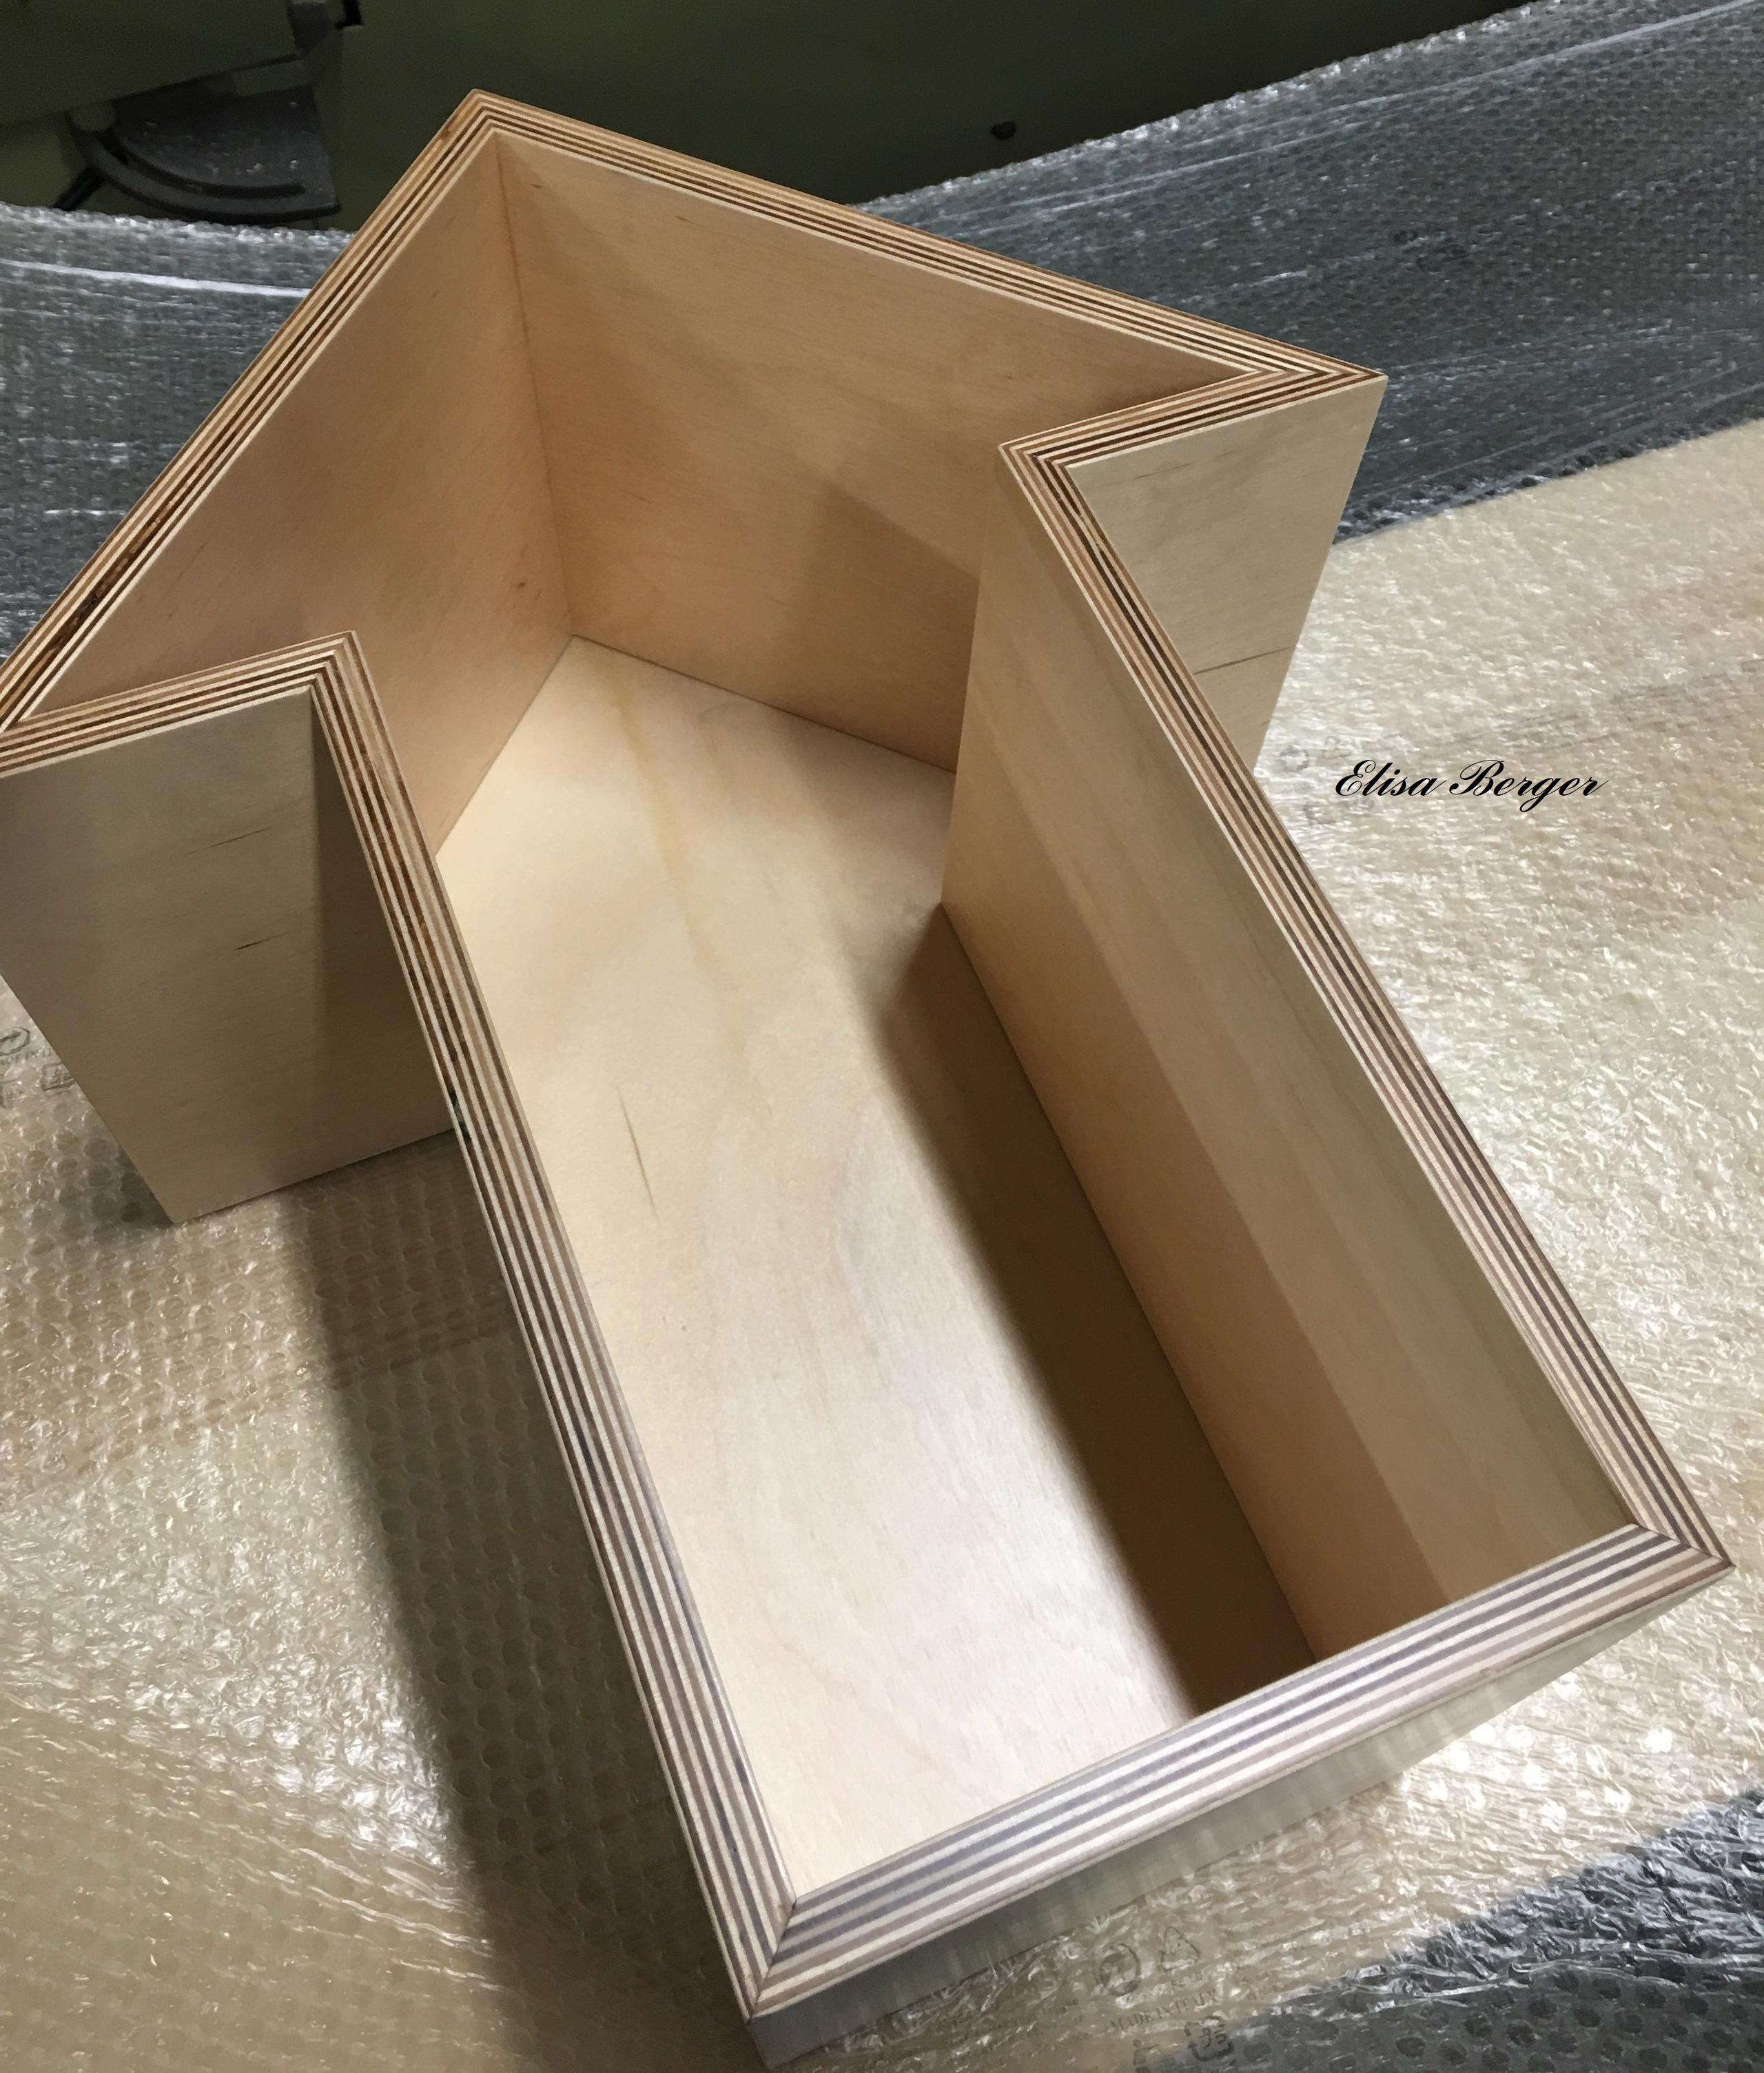 1x ELECTRA WOOD Modular Shelf / Libreria modulare in legno